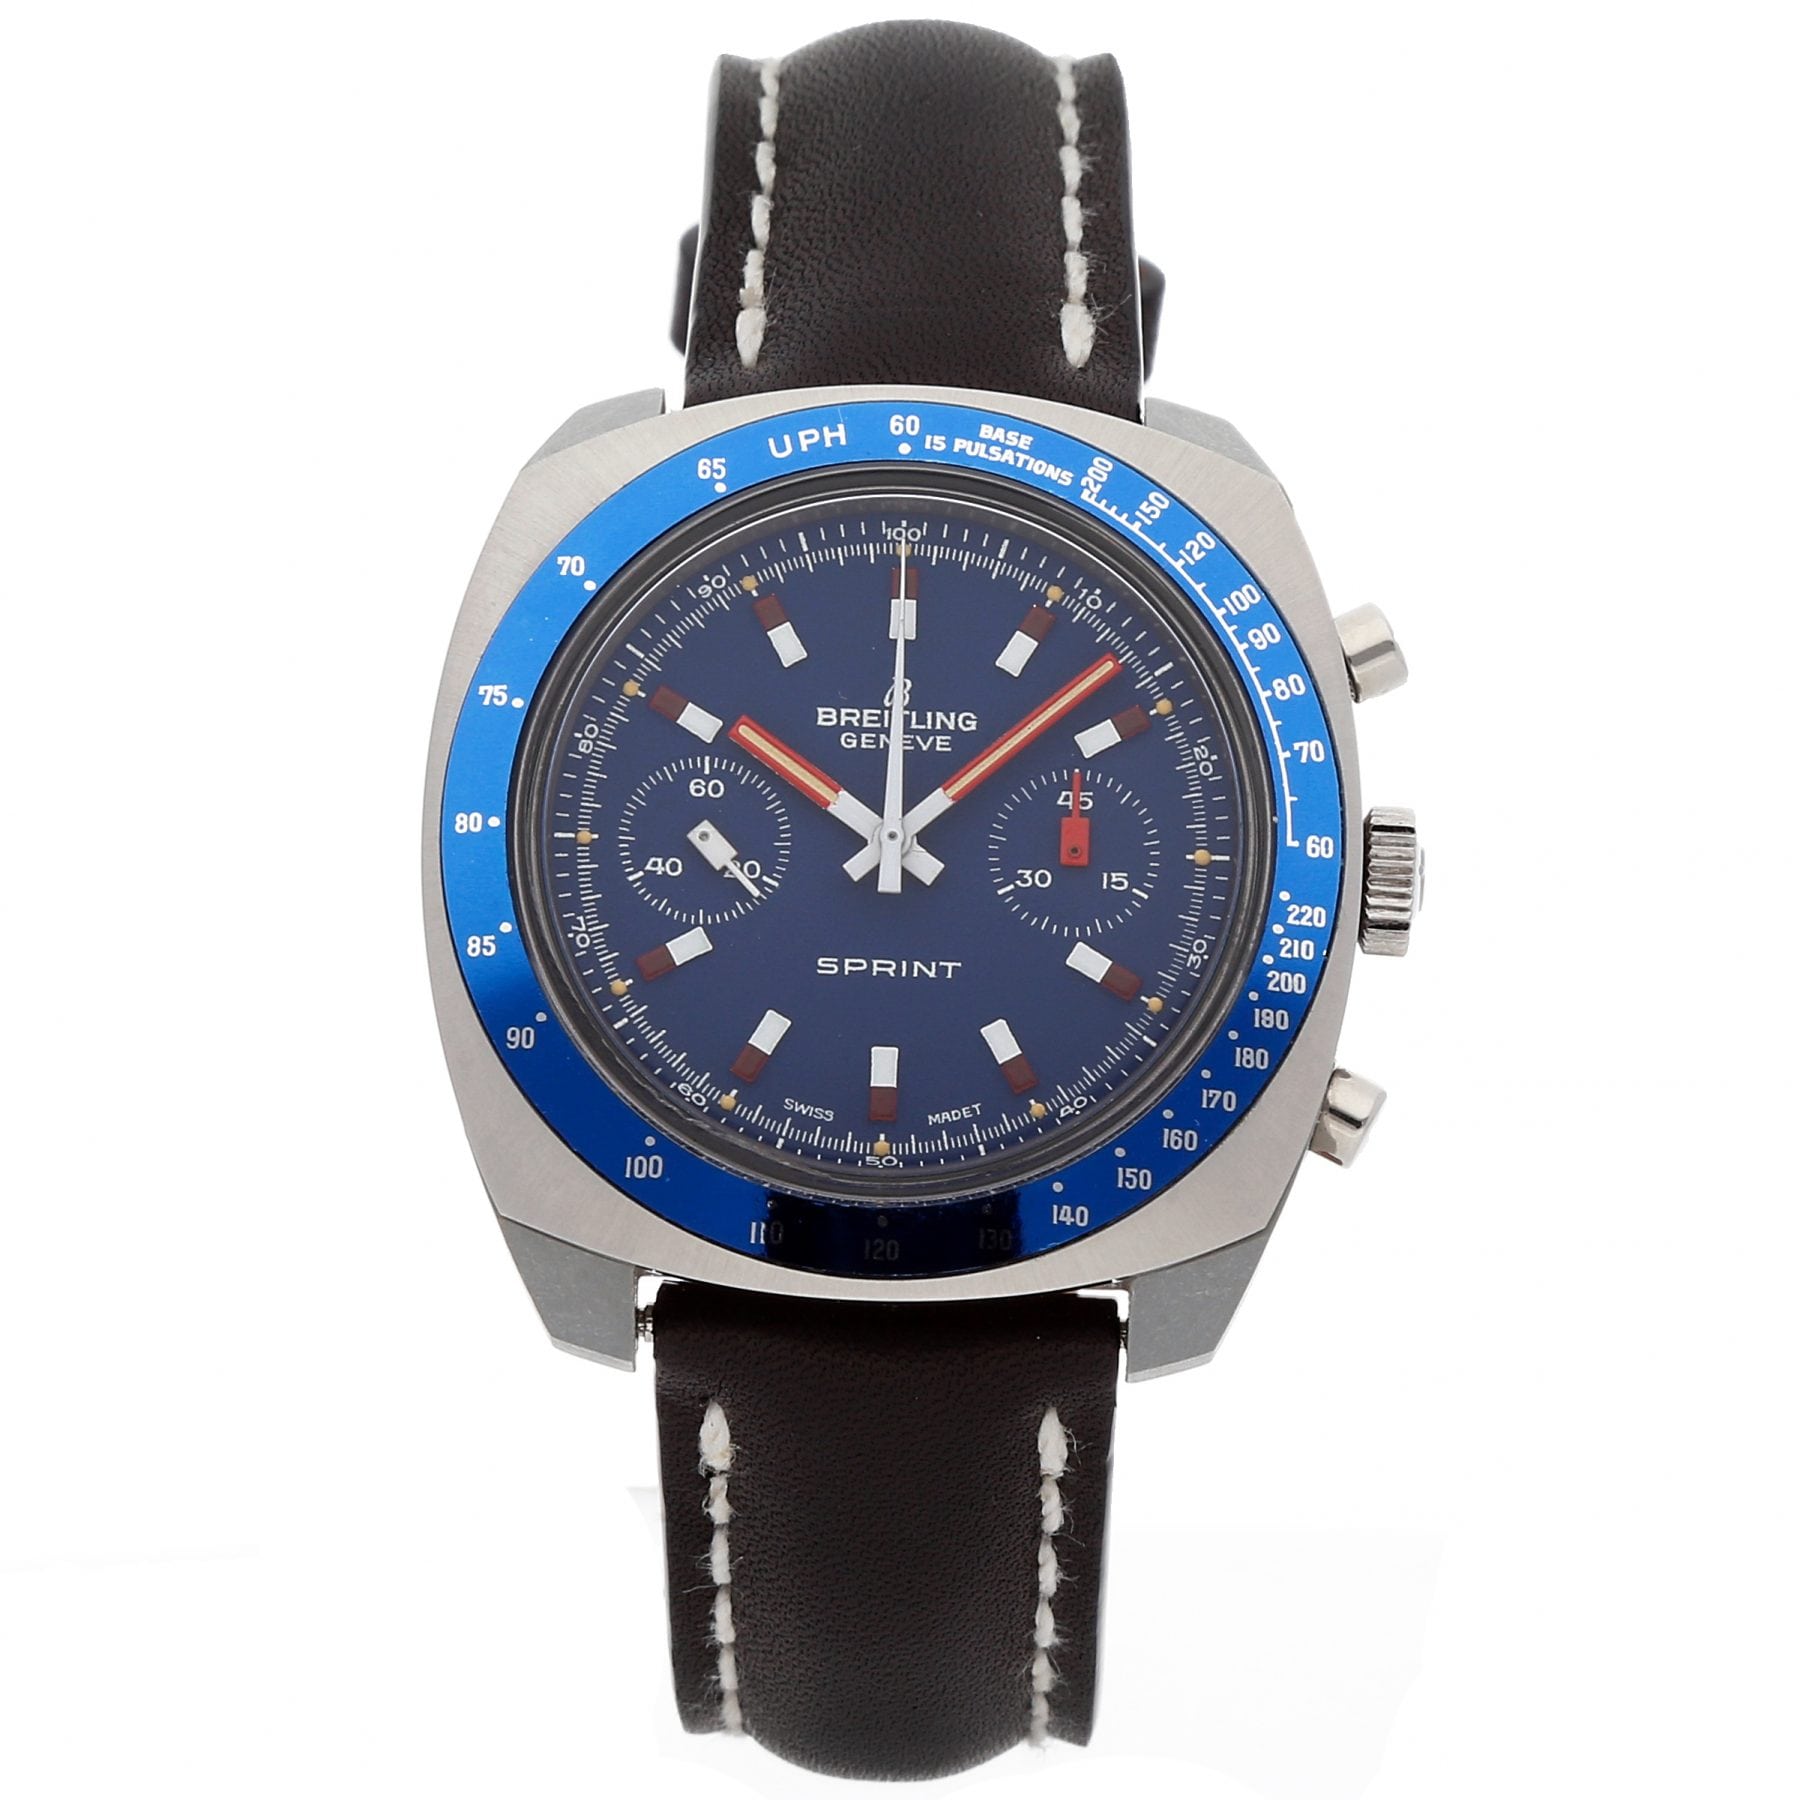 WatchBox Global Timepieces Breitling Sprint Watch